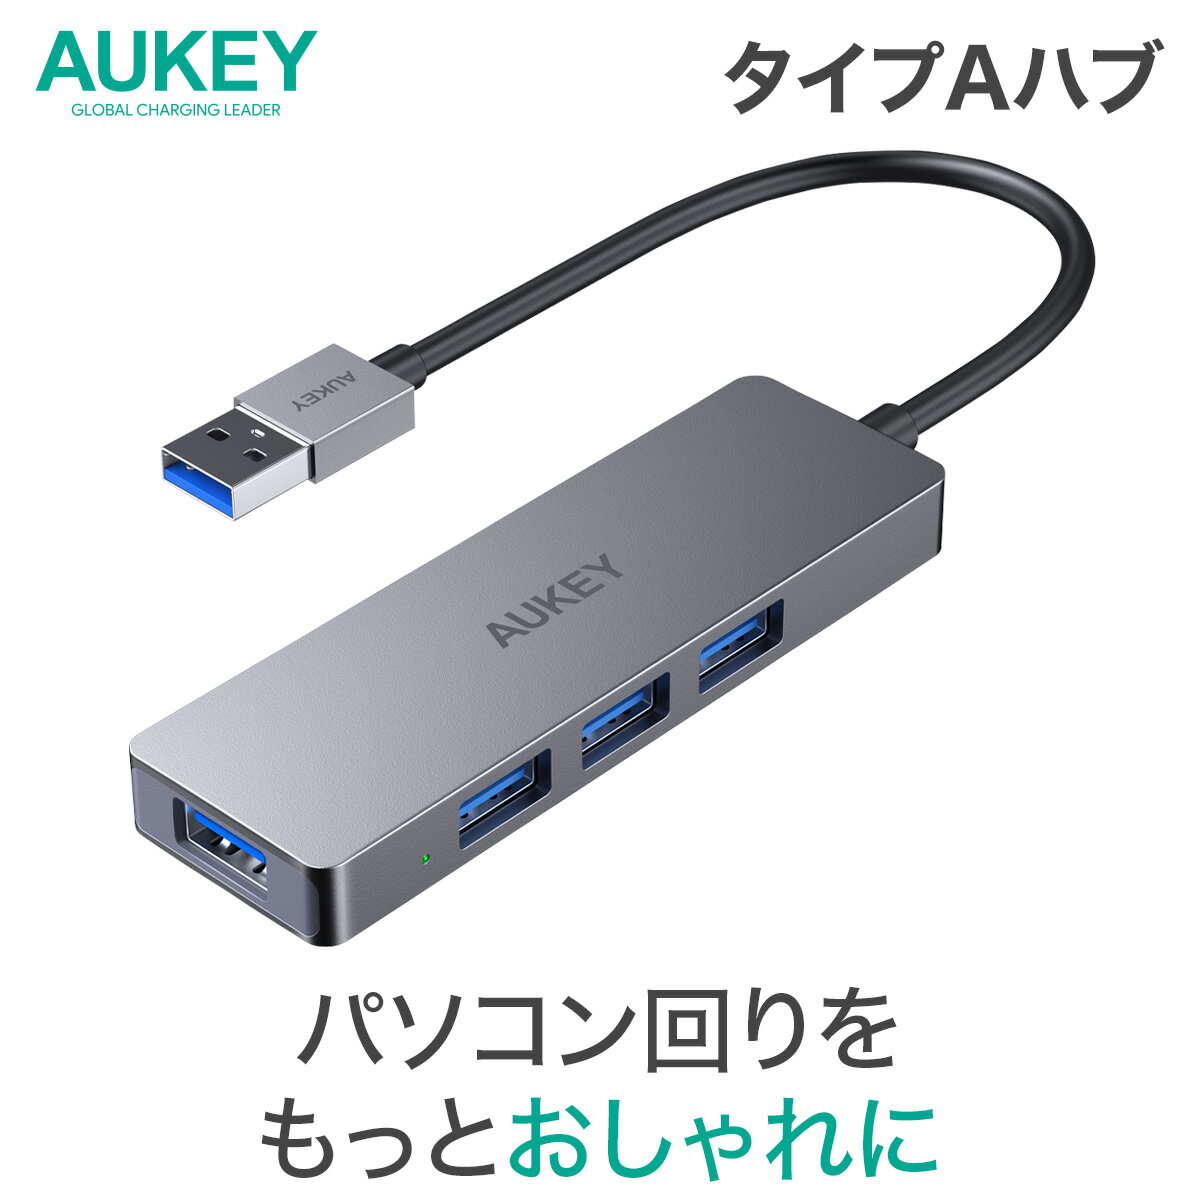 USBハブ USB 3.0 4ポート AUKEY オーキー Unity Slim 4-in-1 グレー CB-H36-GY type-a スリム おしゃれ 薄型 軽量 コンパクト 高速データ転送 5Gbps 200mm USB-A 2年保証